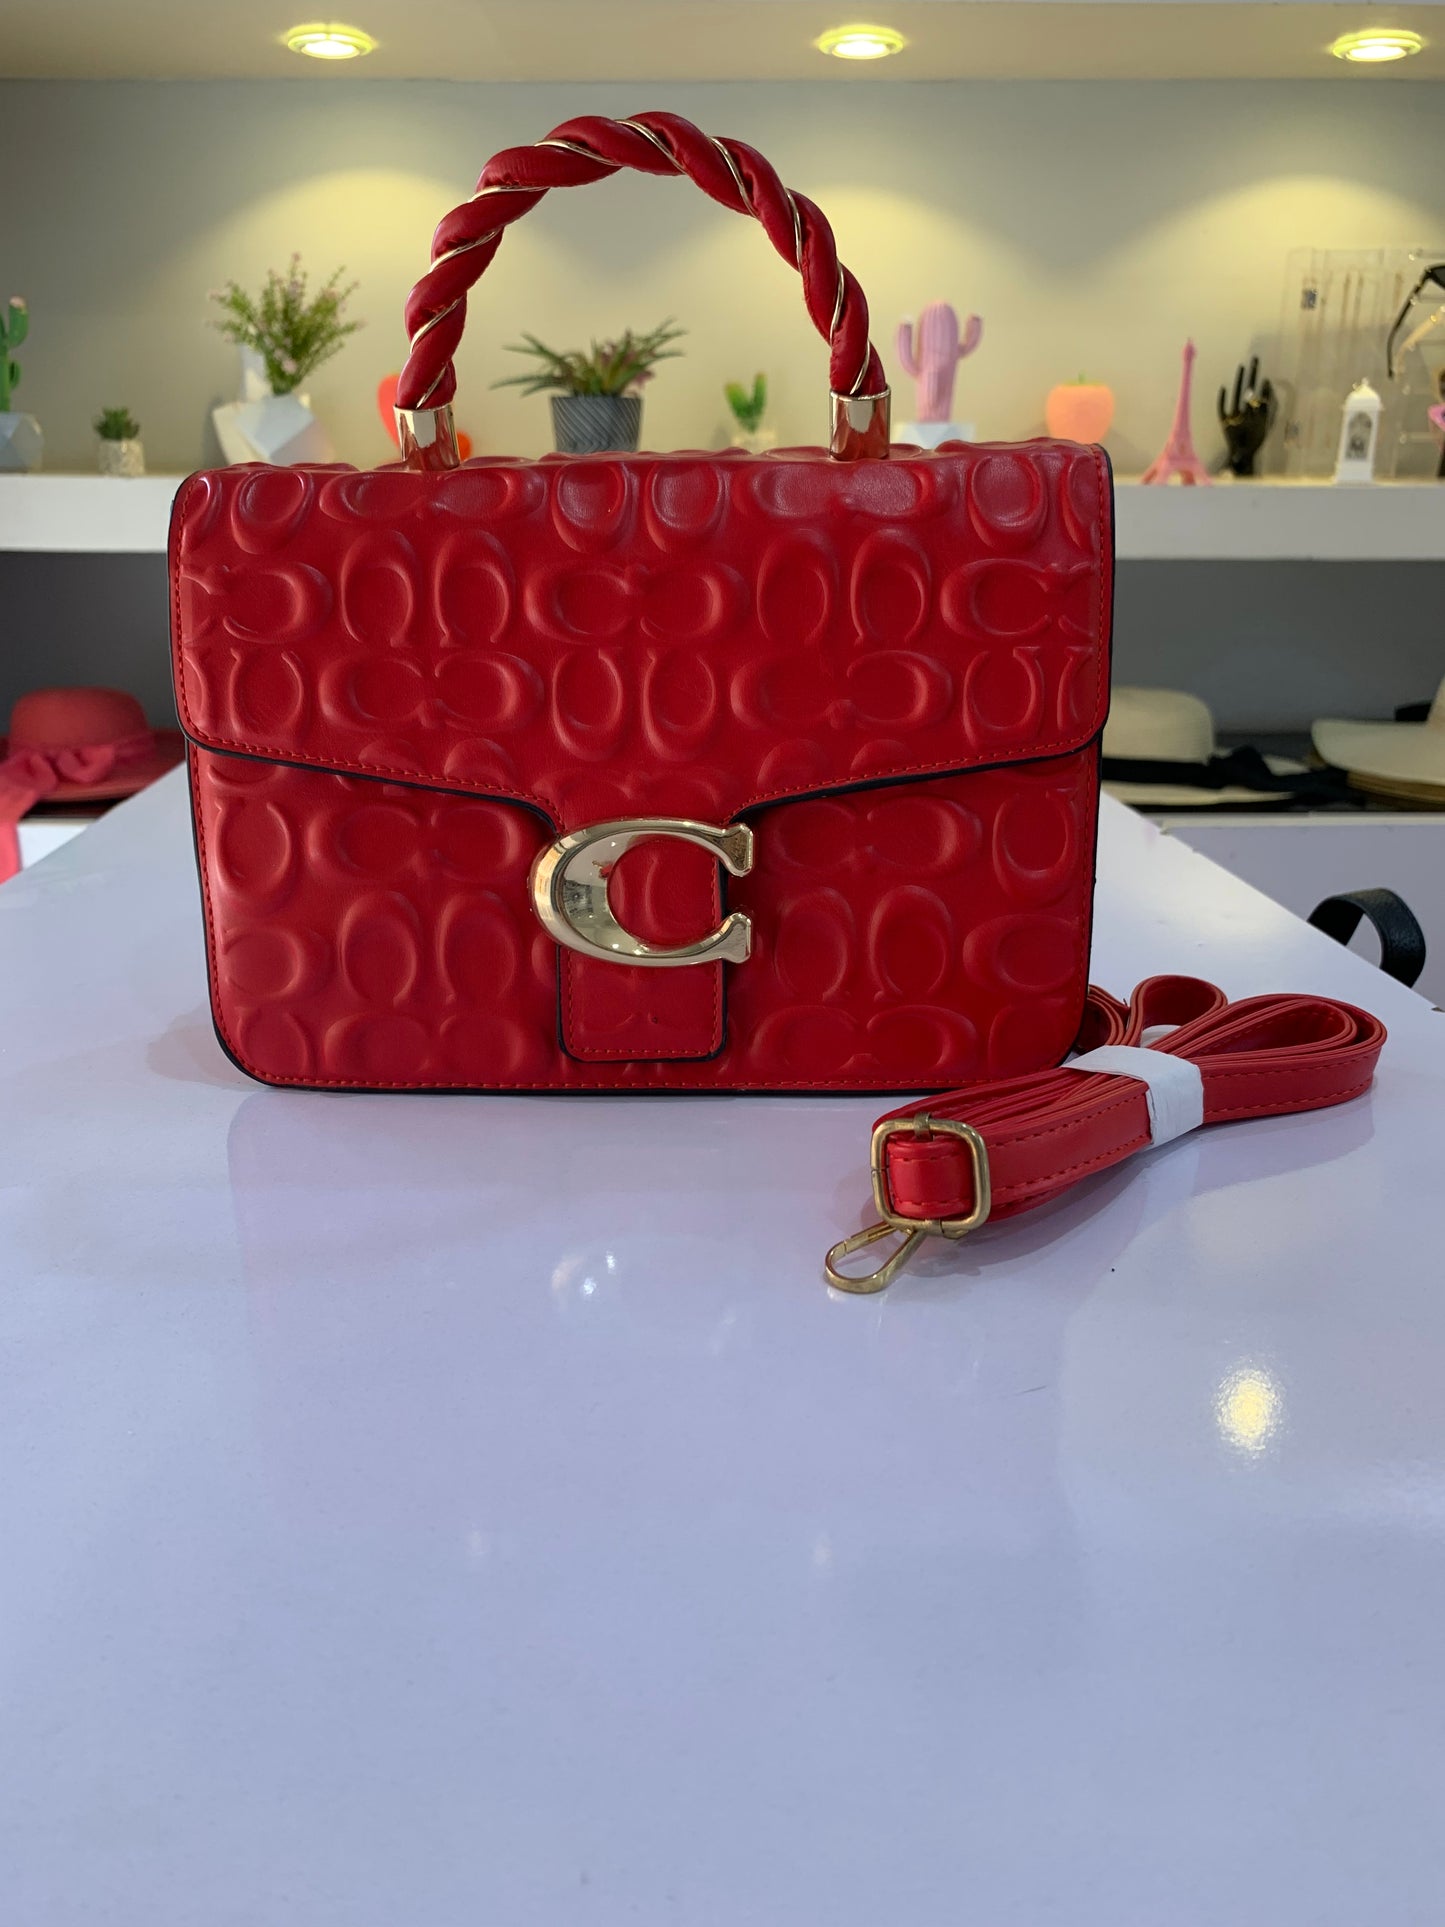 Red Exquisite Leather Handbags